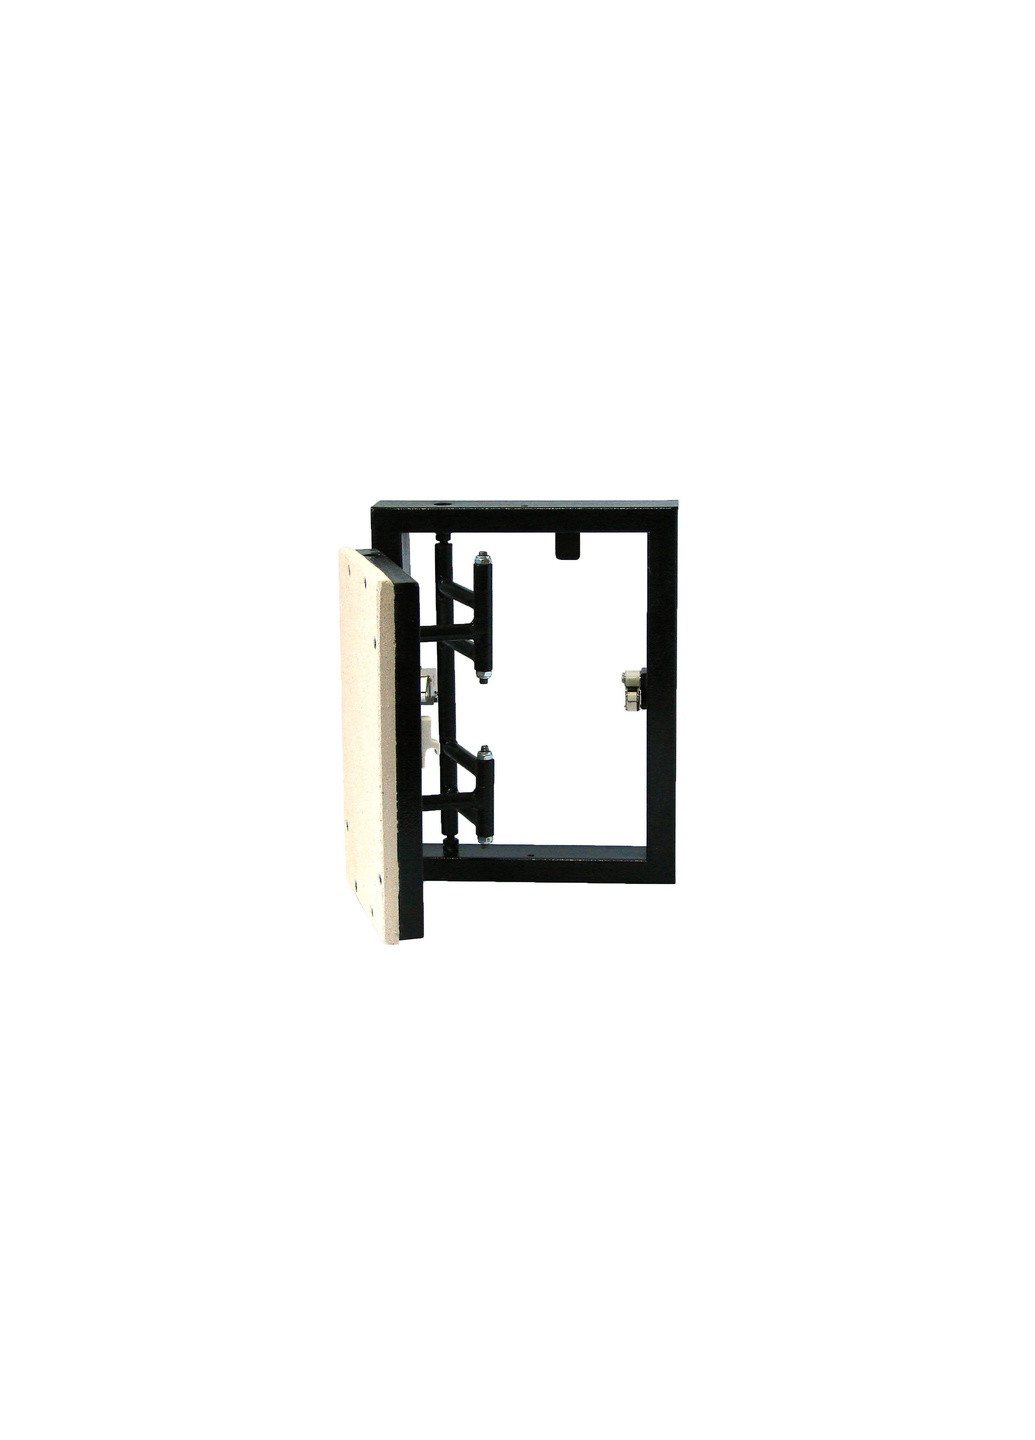 Ревизионный люк скрытого монтажа под плитку нажимного типа 250x400 ревизионная дверца для плитки (1118) S-Dom (264208720)